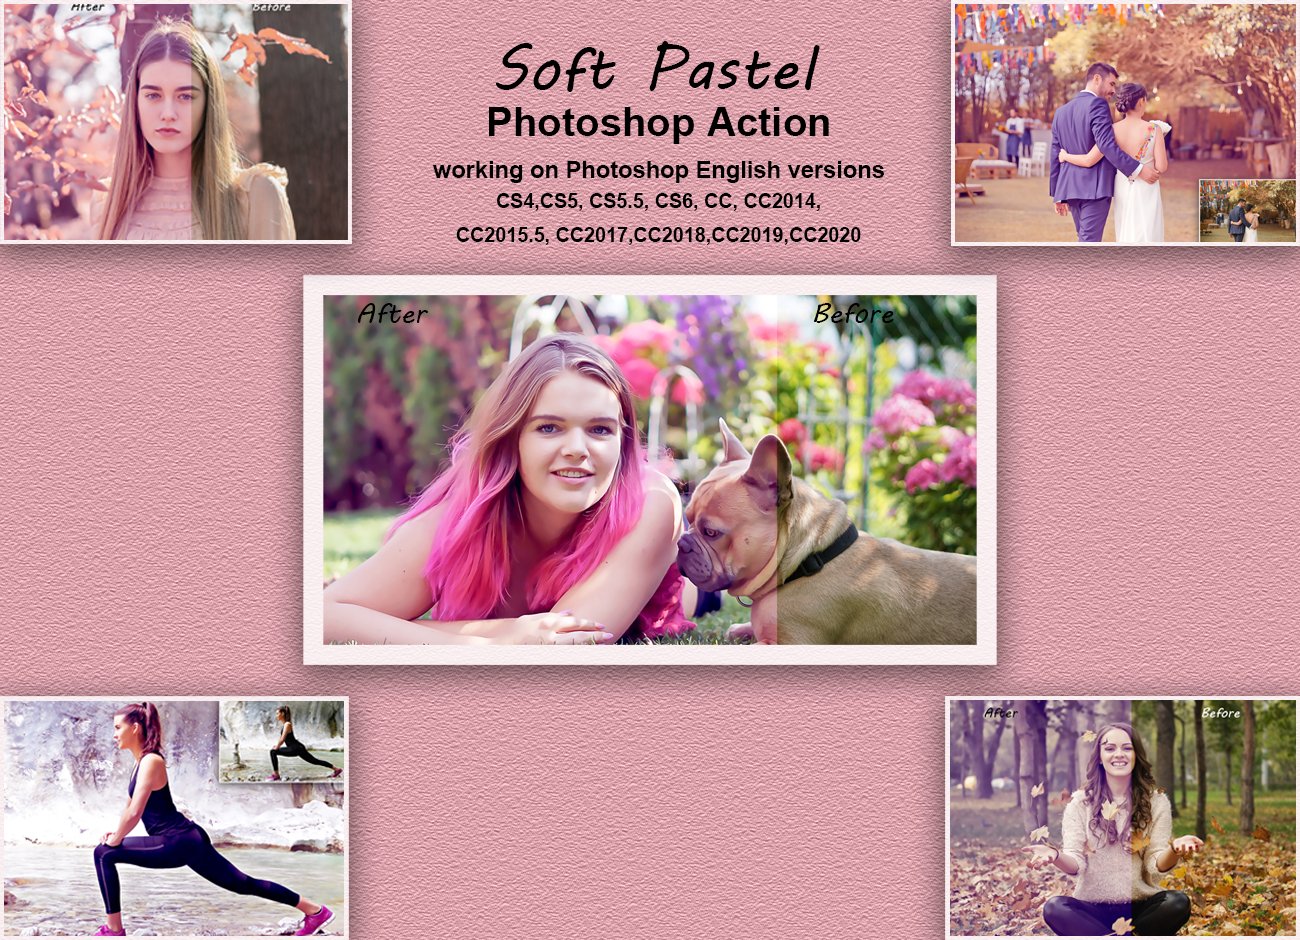 Soft Pastel Photoshop Actioncover image.